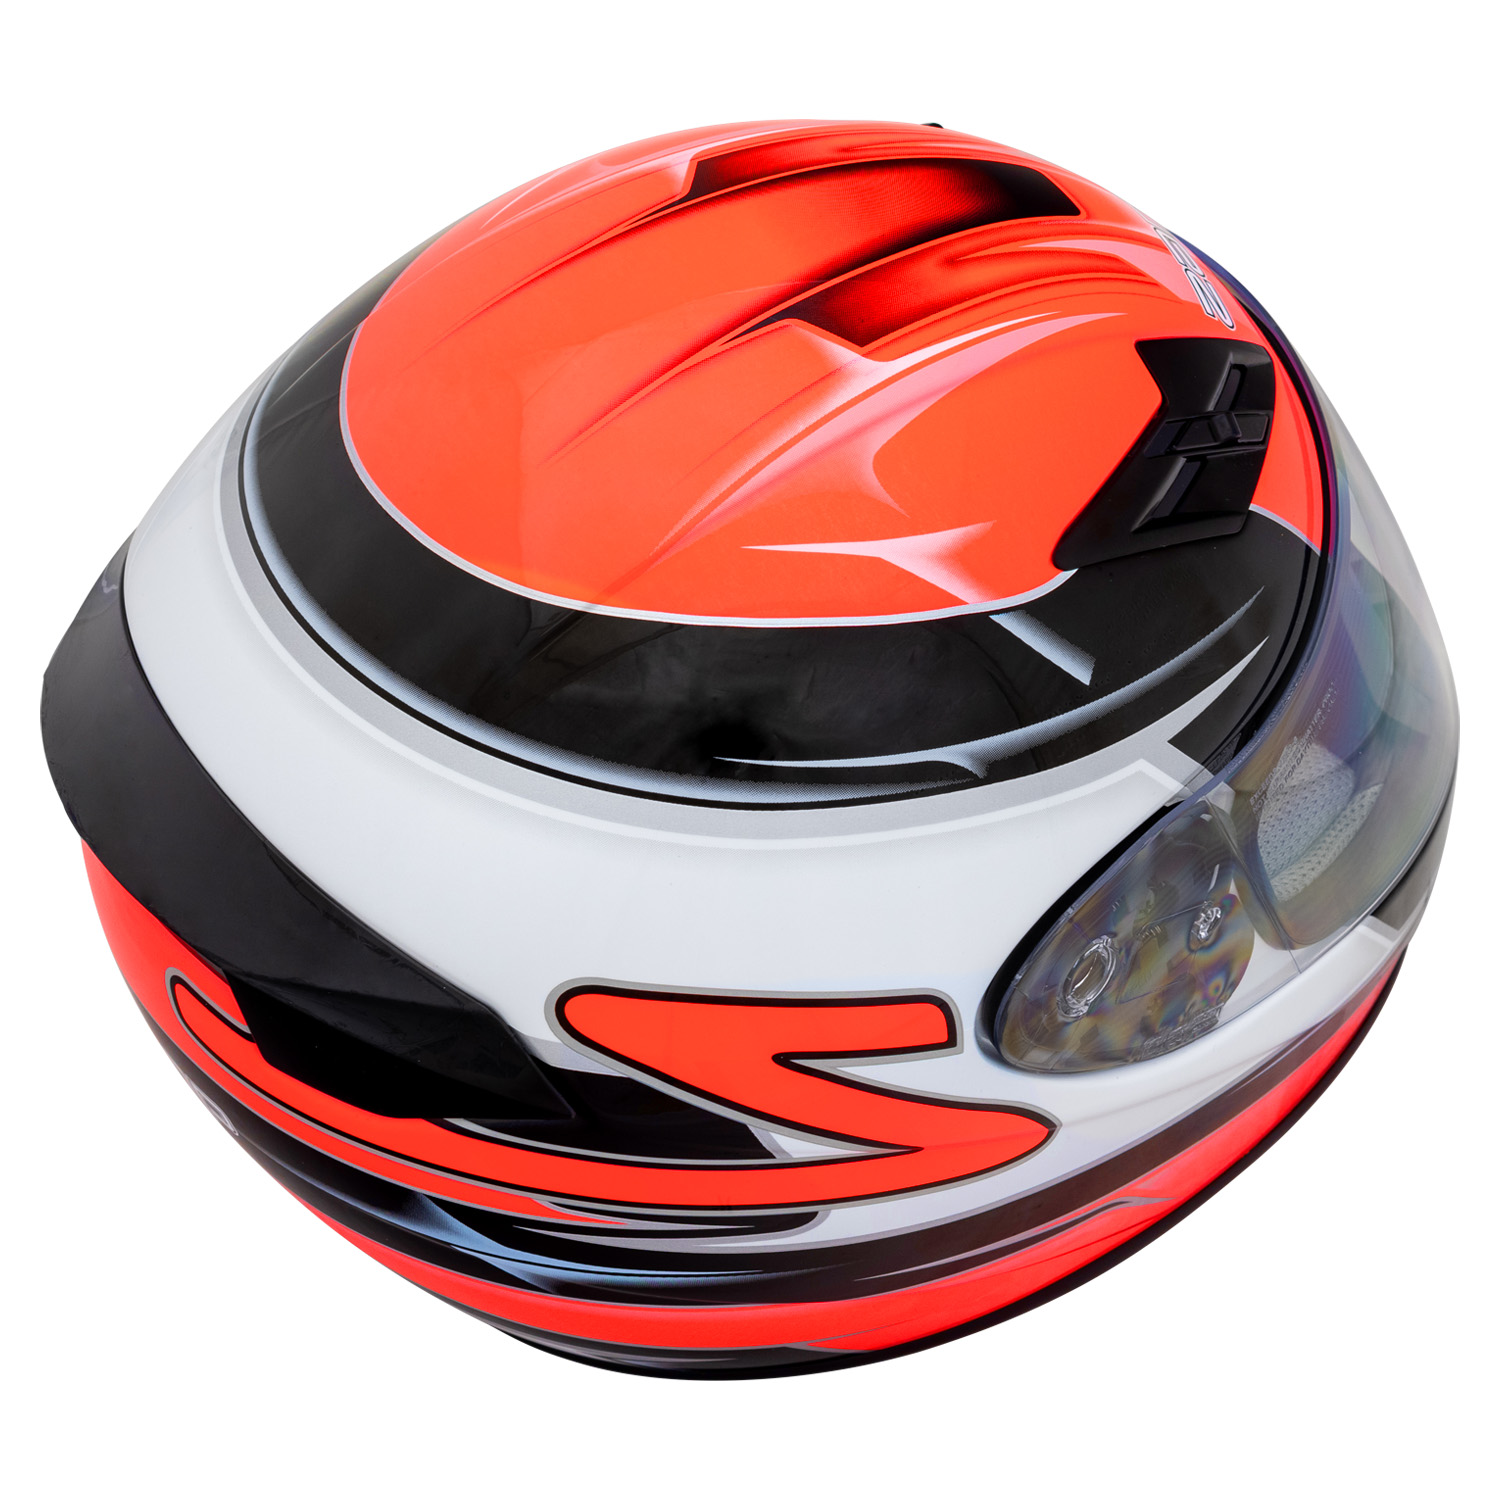 FS-9 Orange Graphic Helmet